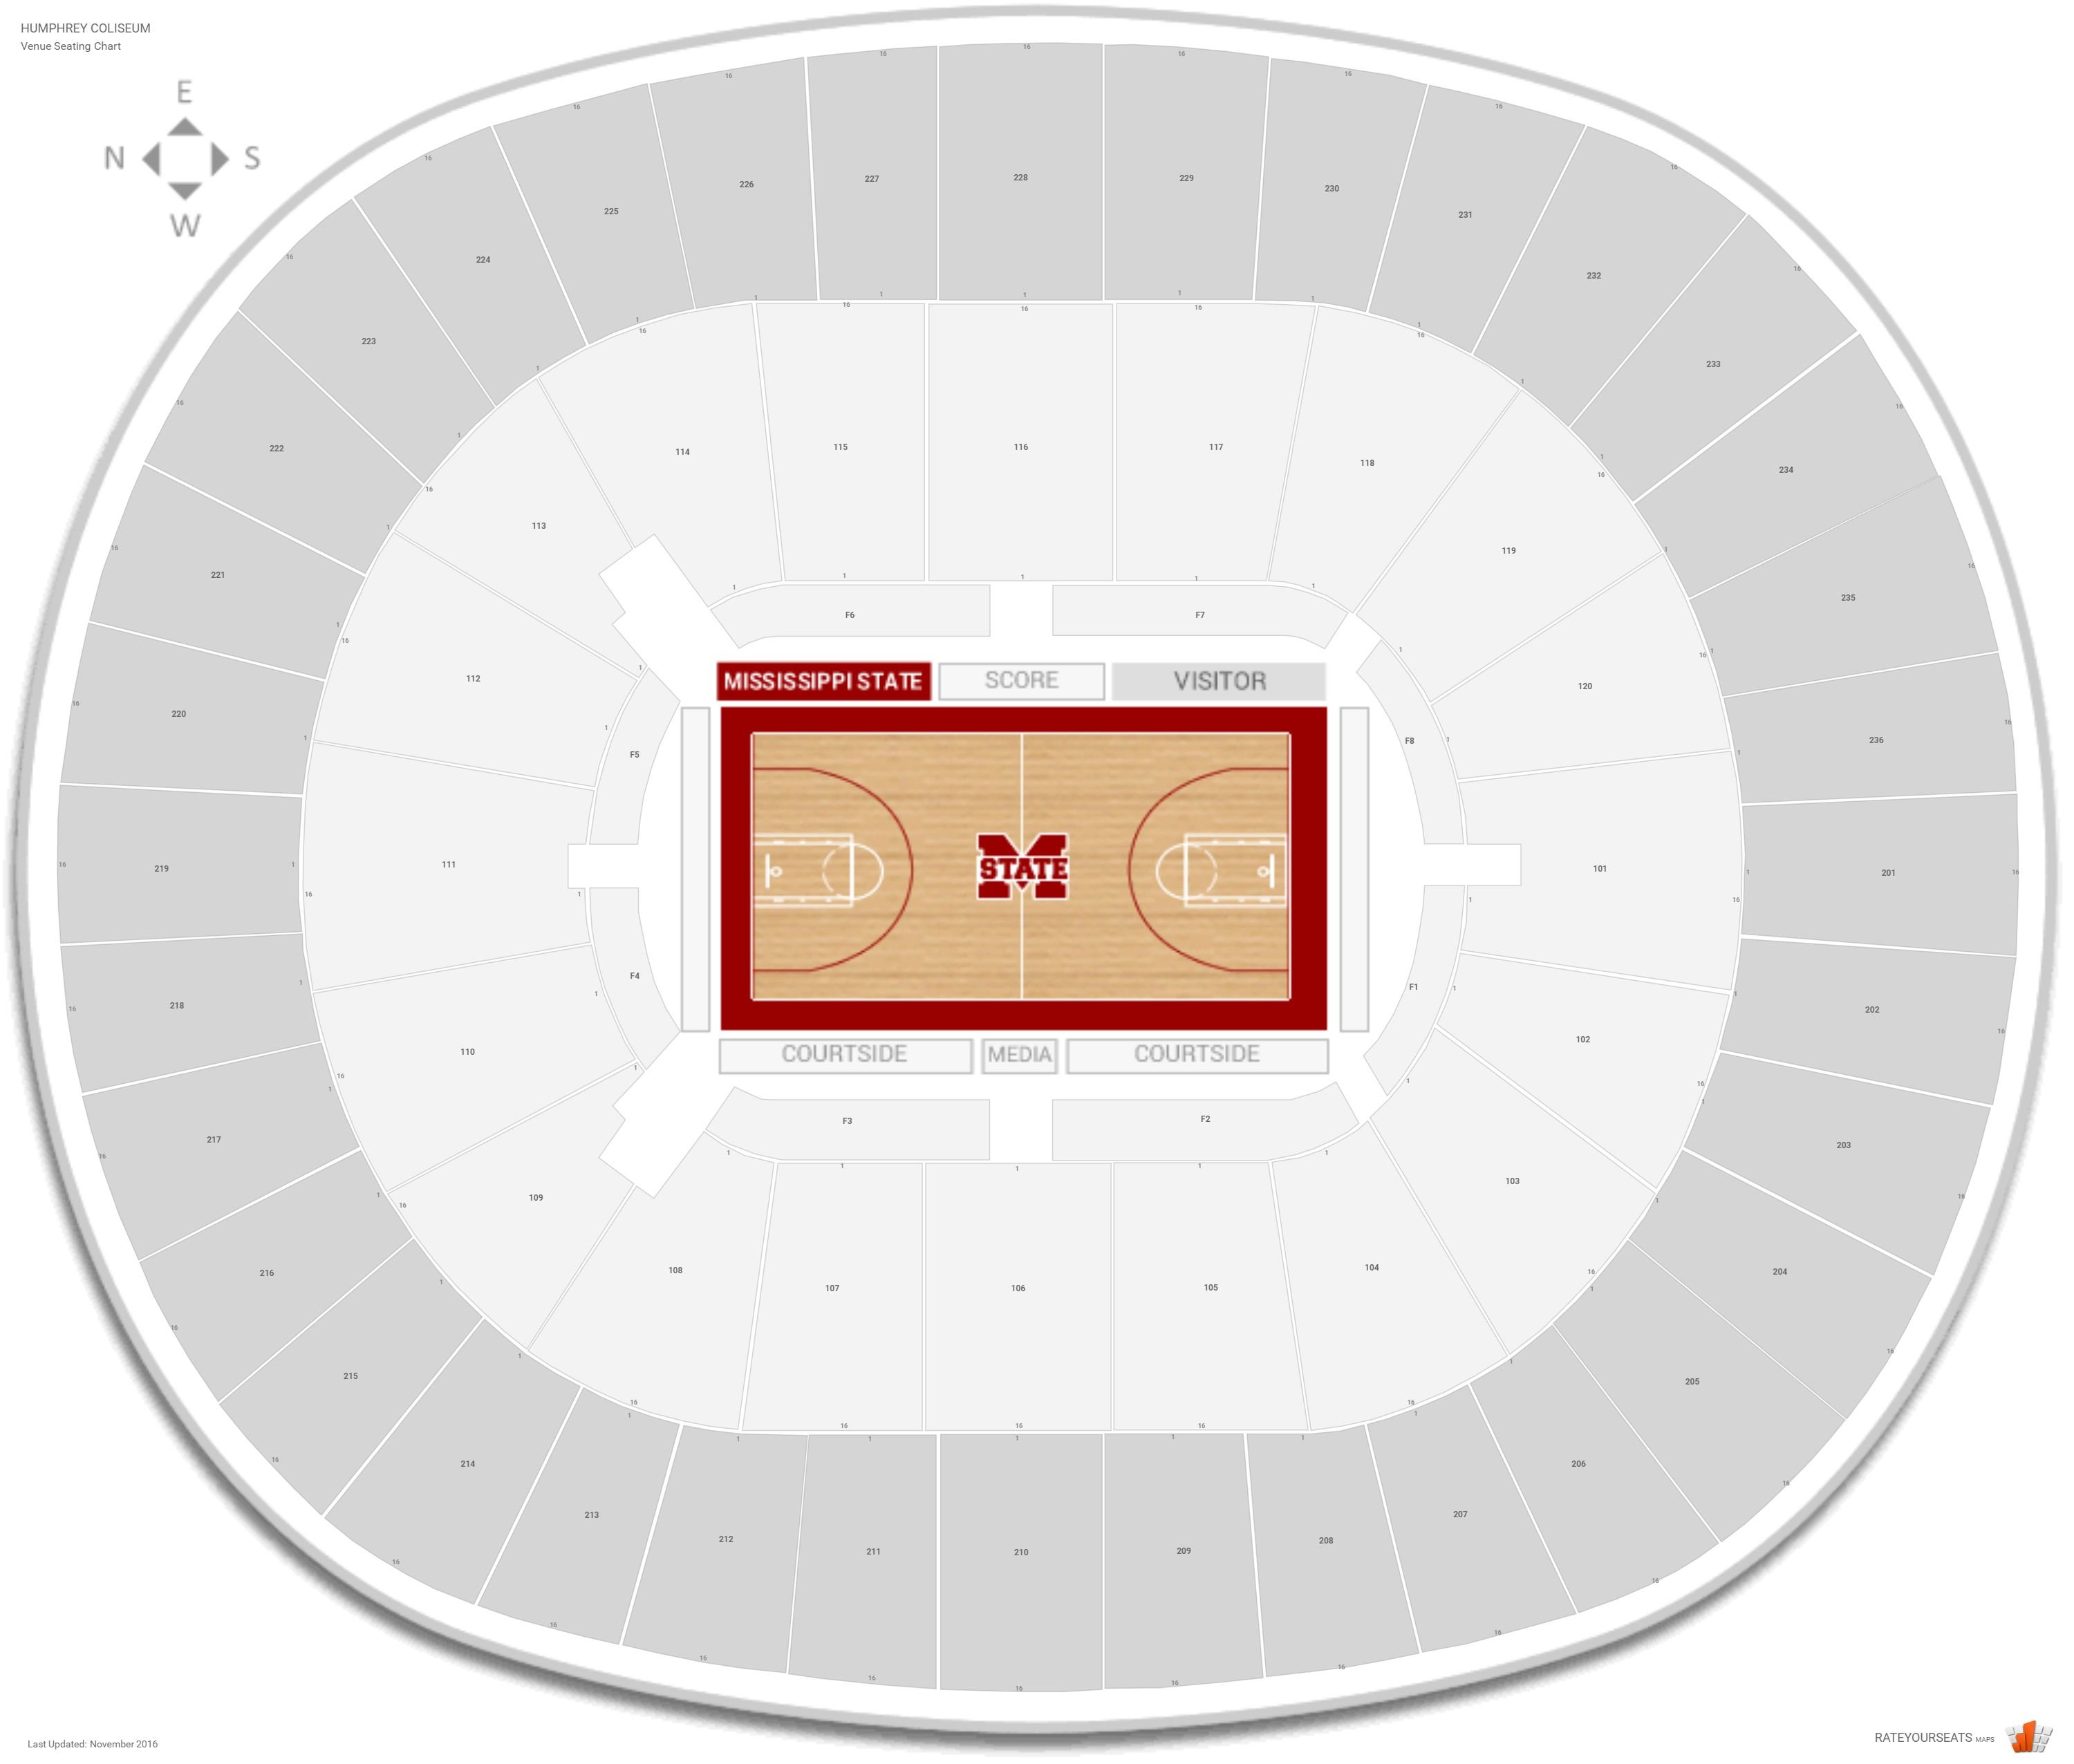 Mississippi Coliseum Seating Chart